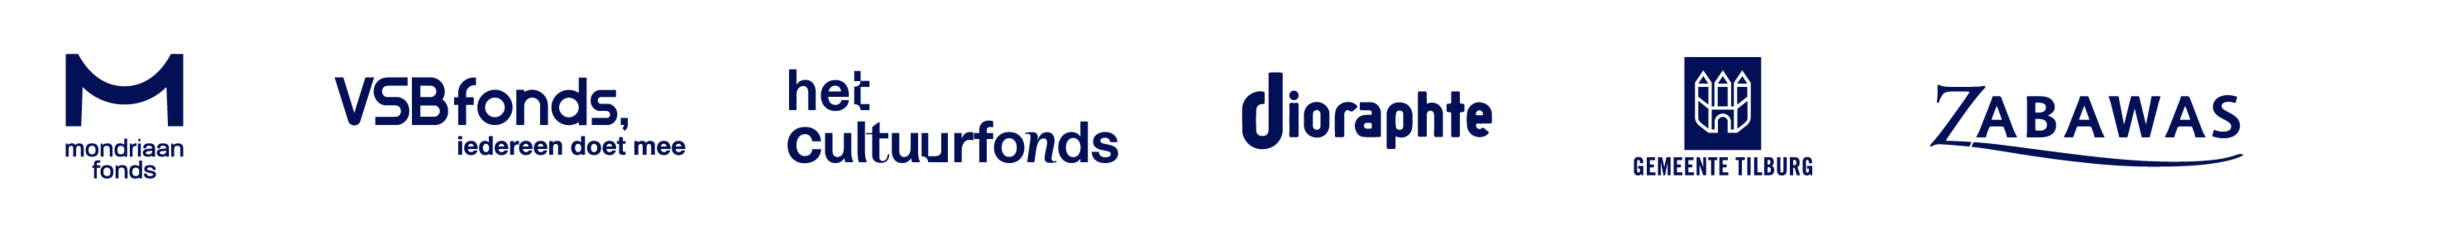 Diverse logo's van subsidiënten 